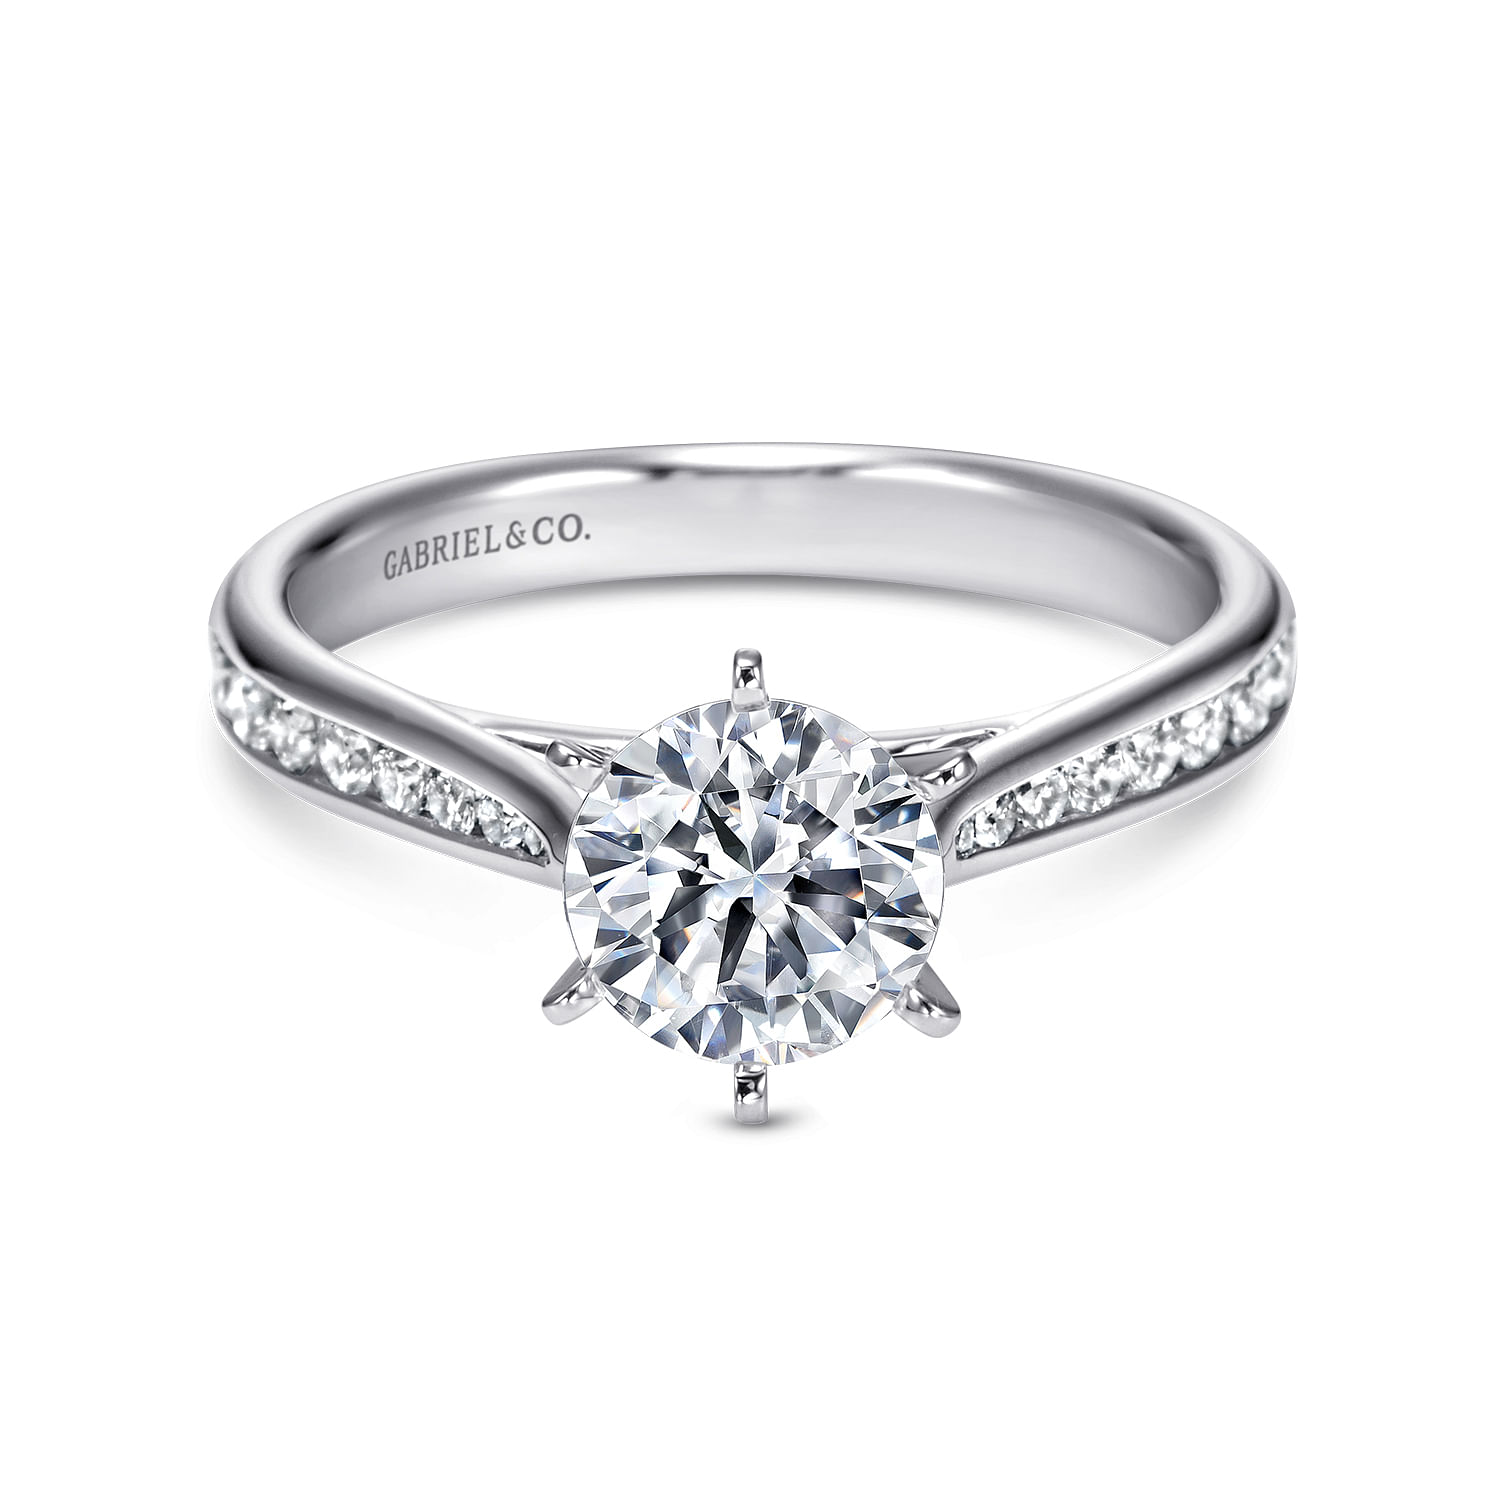 Danielle - 14K White Gold Round Diamond Engagement Ring